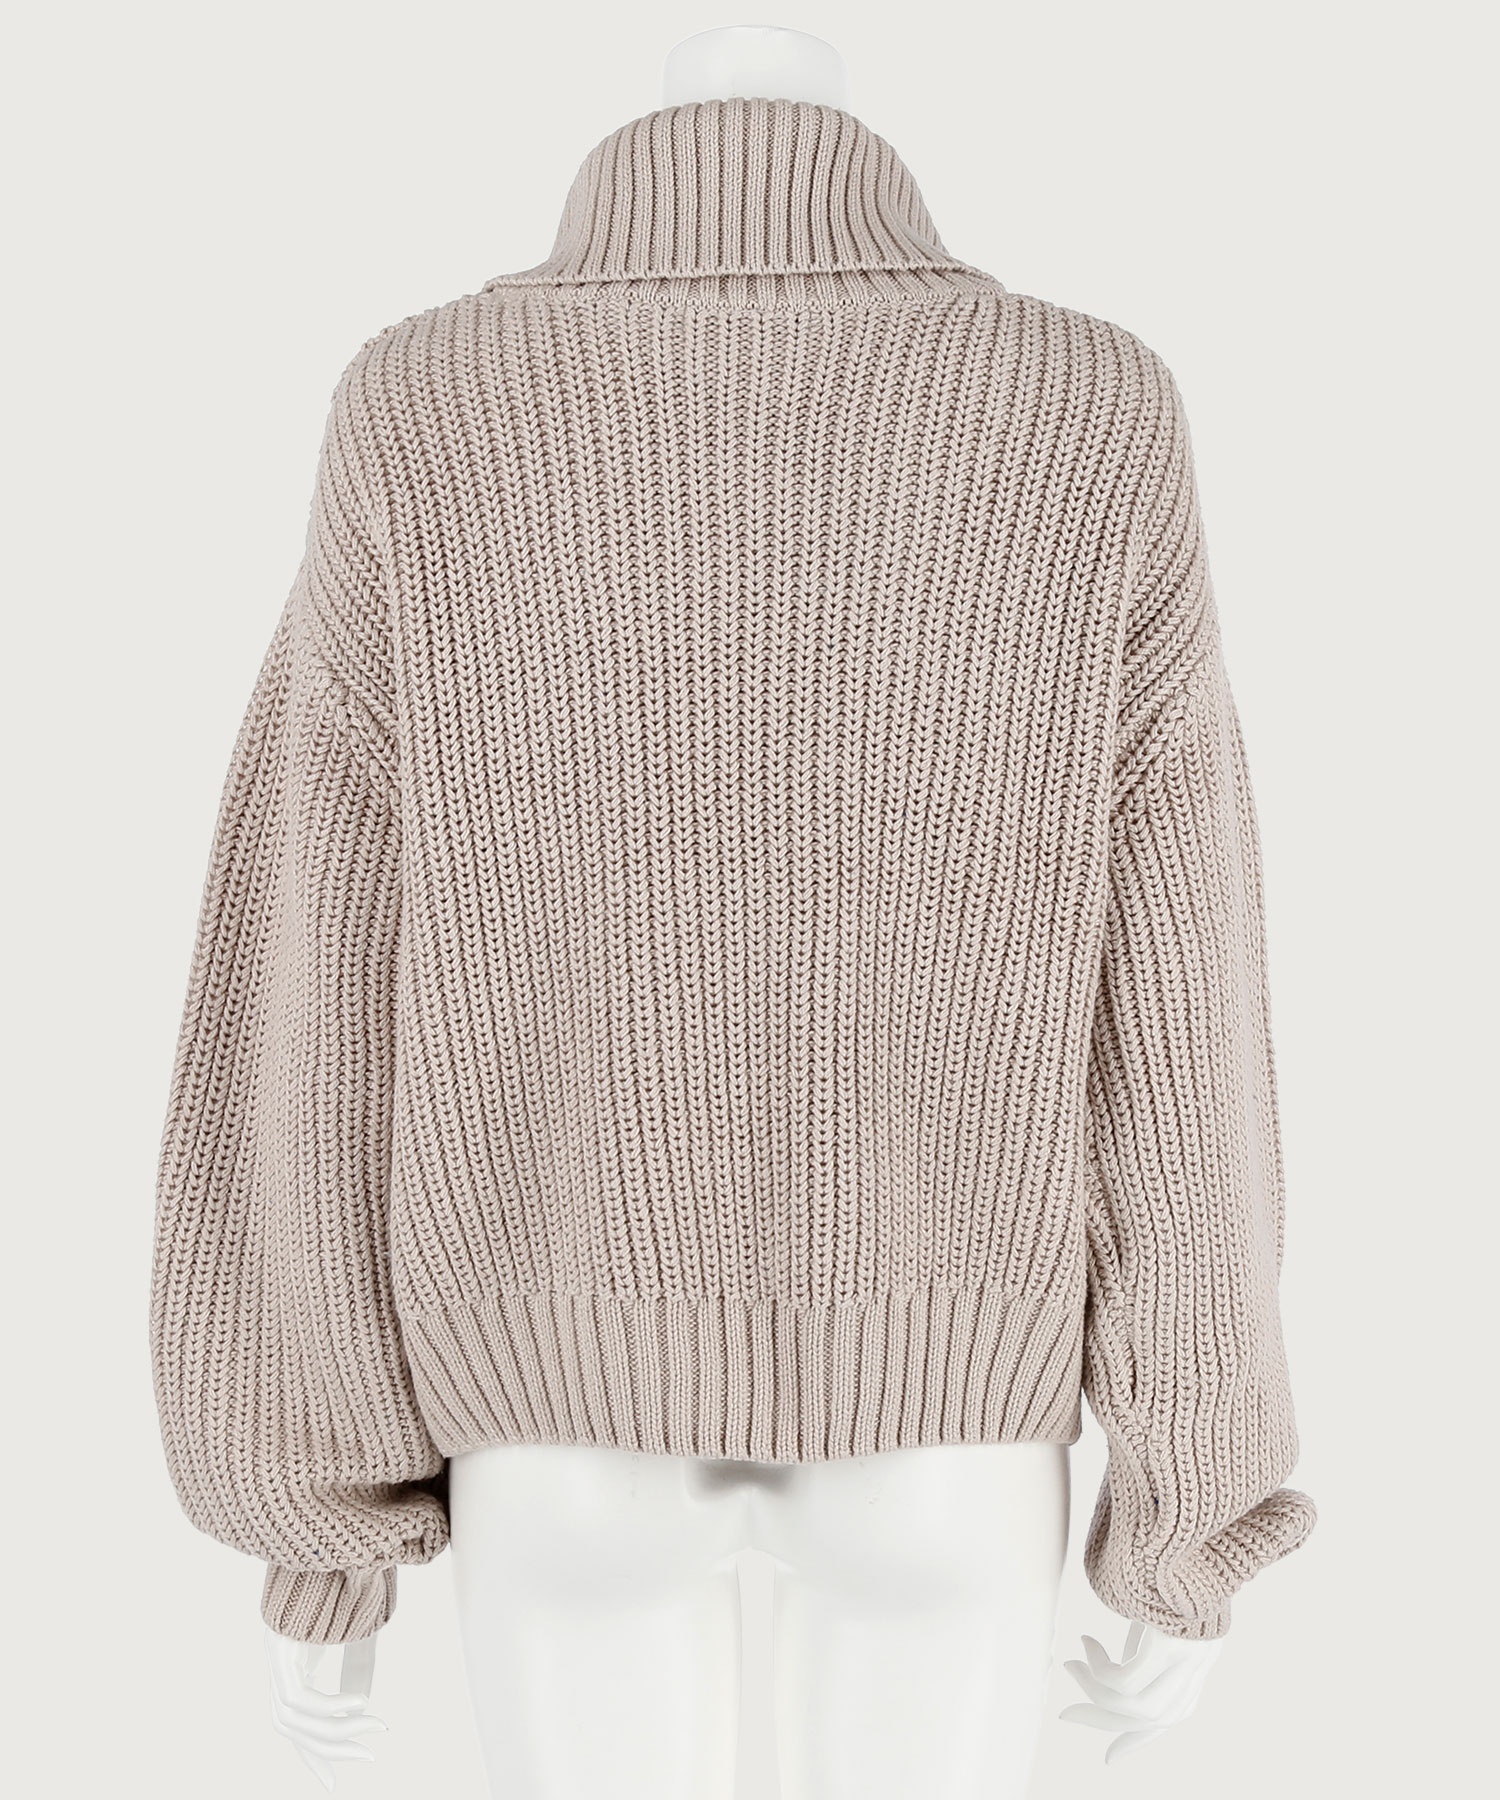 Viviette knitted sweater